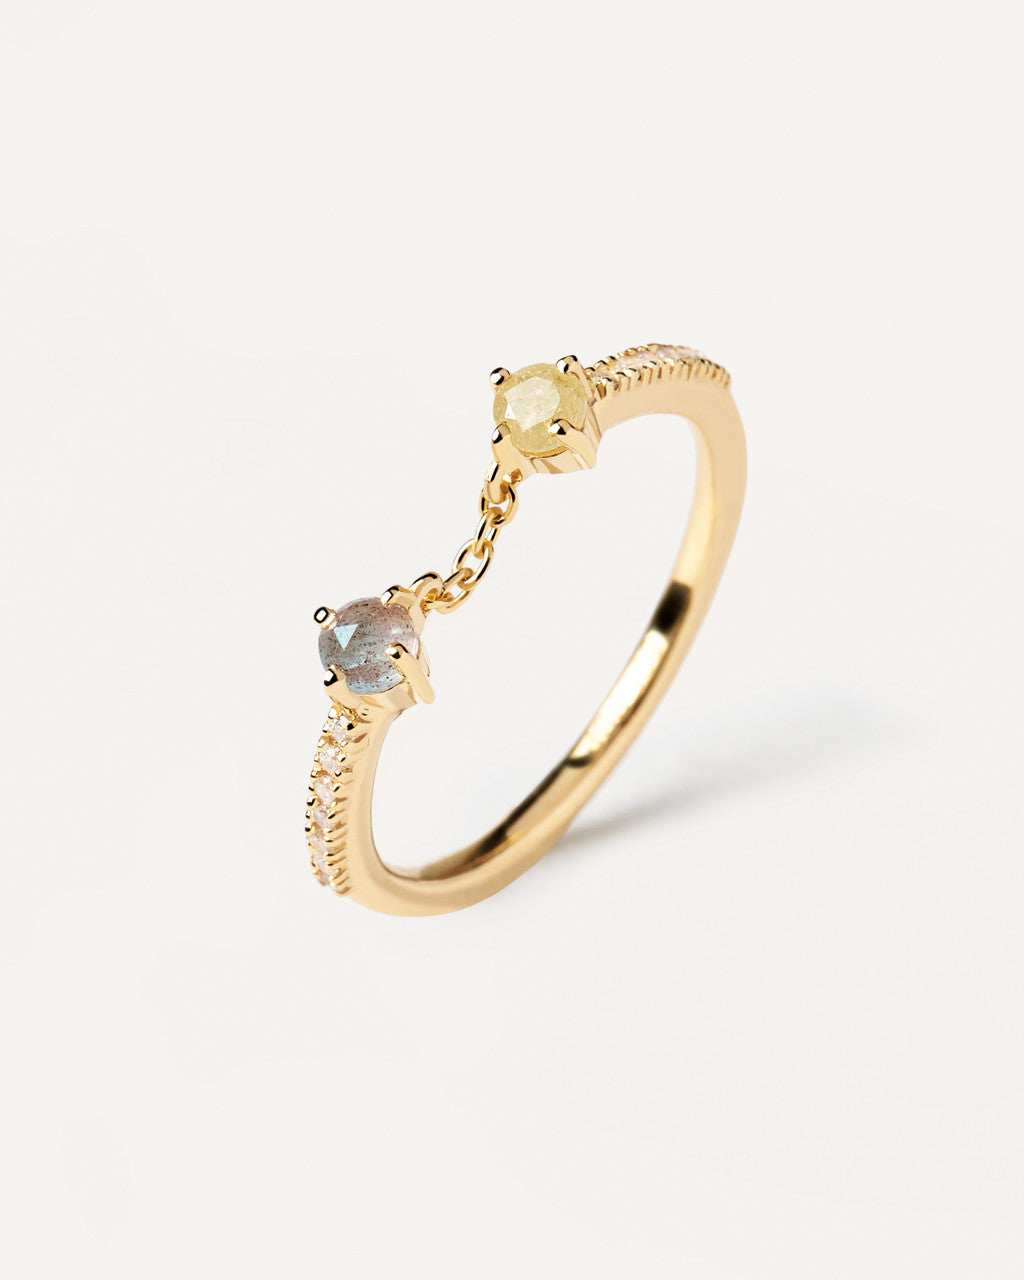 P D PAOLA Zena Gold Ring - AN01-652 | Ice Jewellery Australia